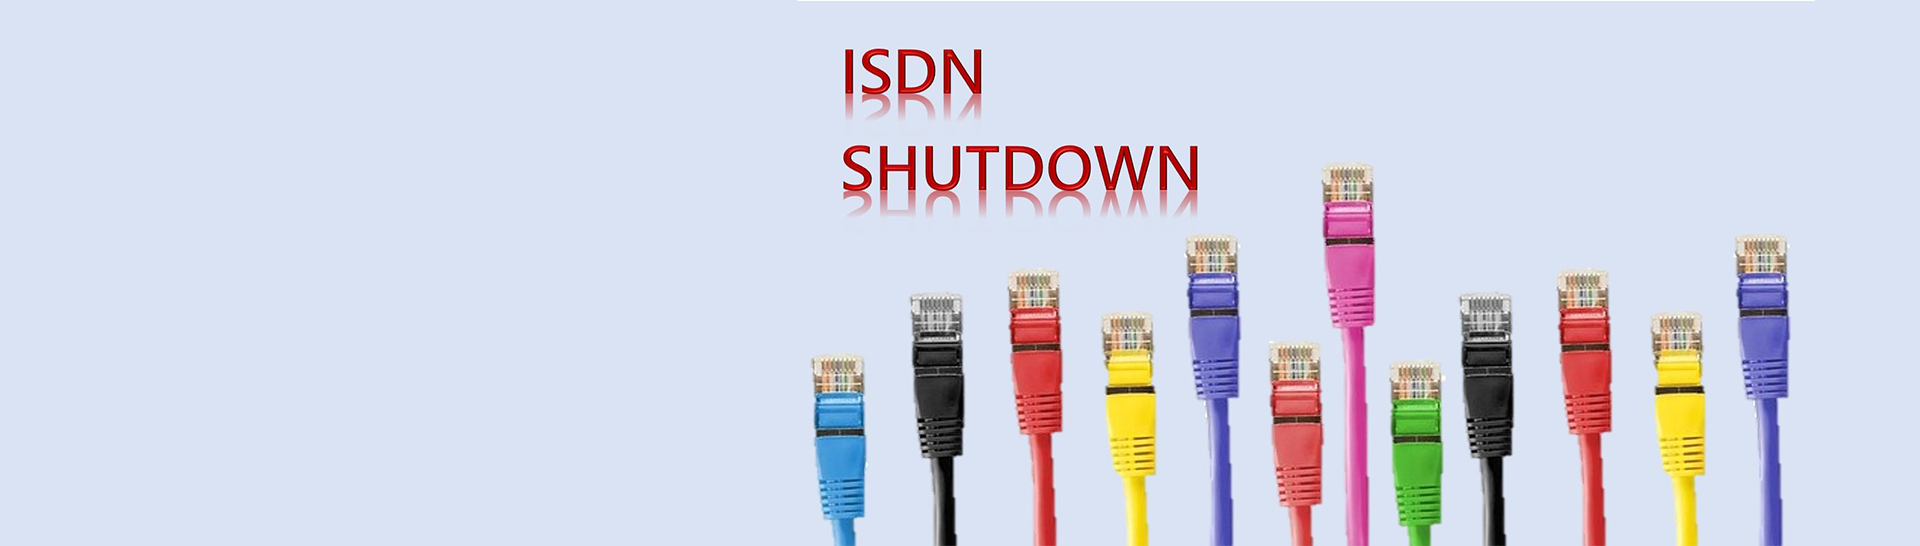 Warning final countdown to ISDN network shutdown resized